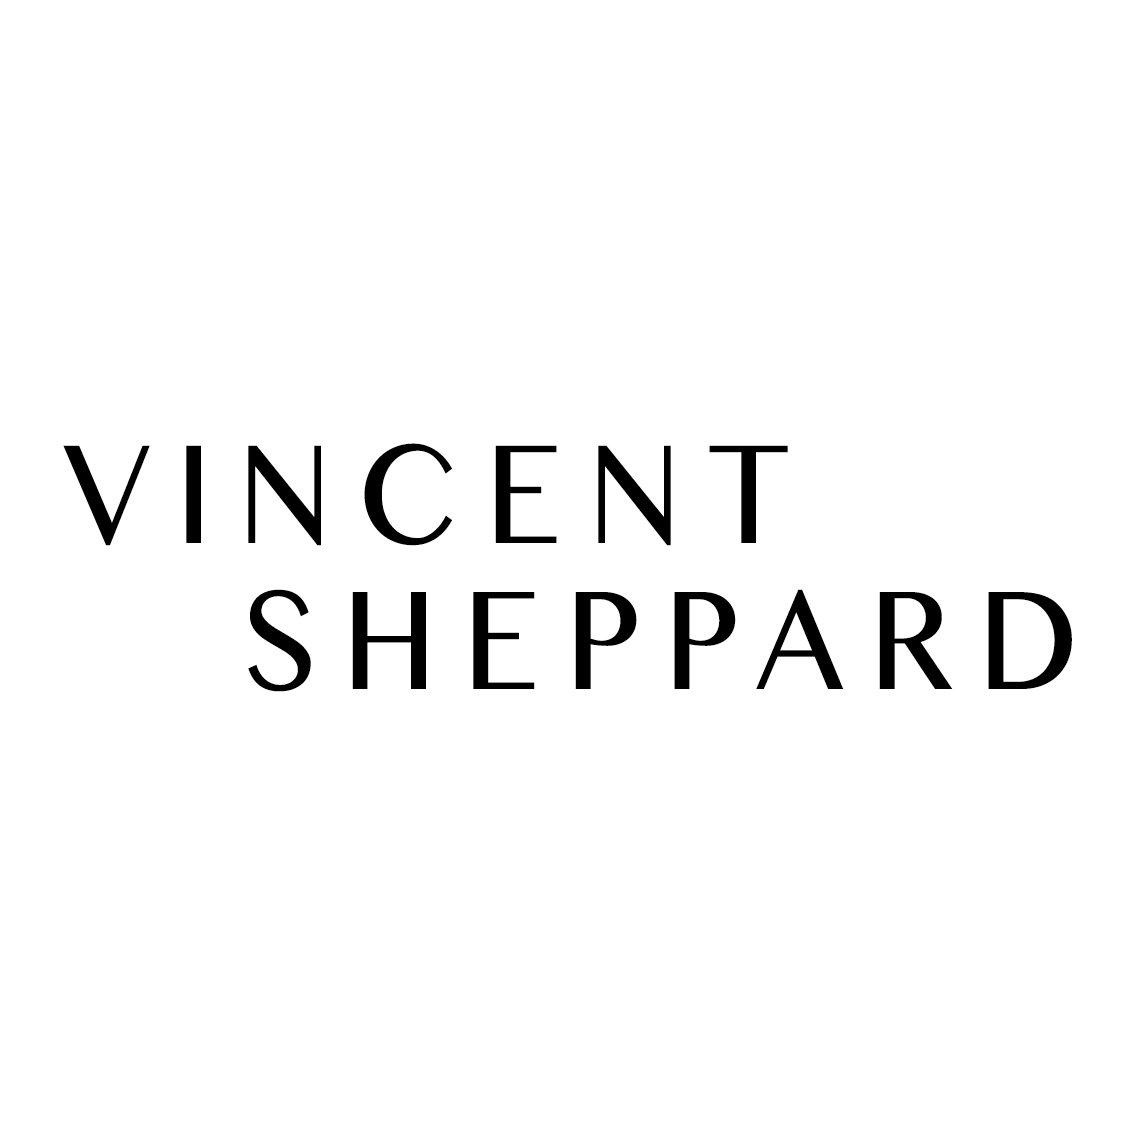 Vincent Sheppard | Vincent Sheppard